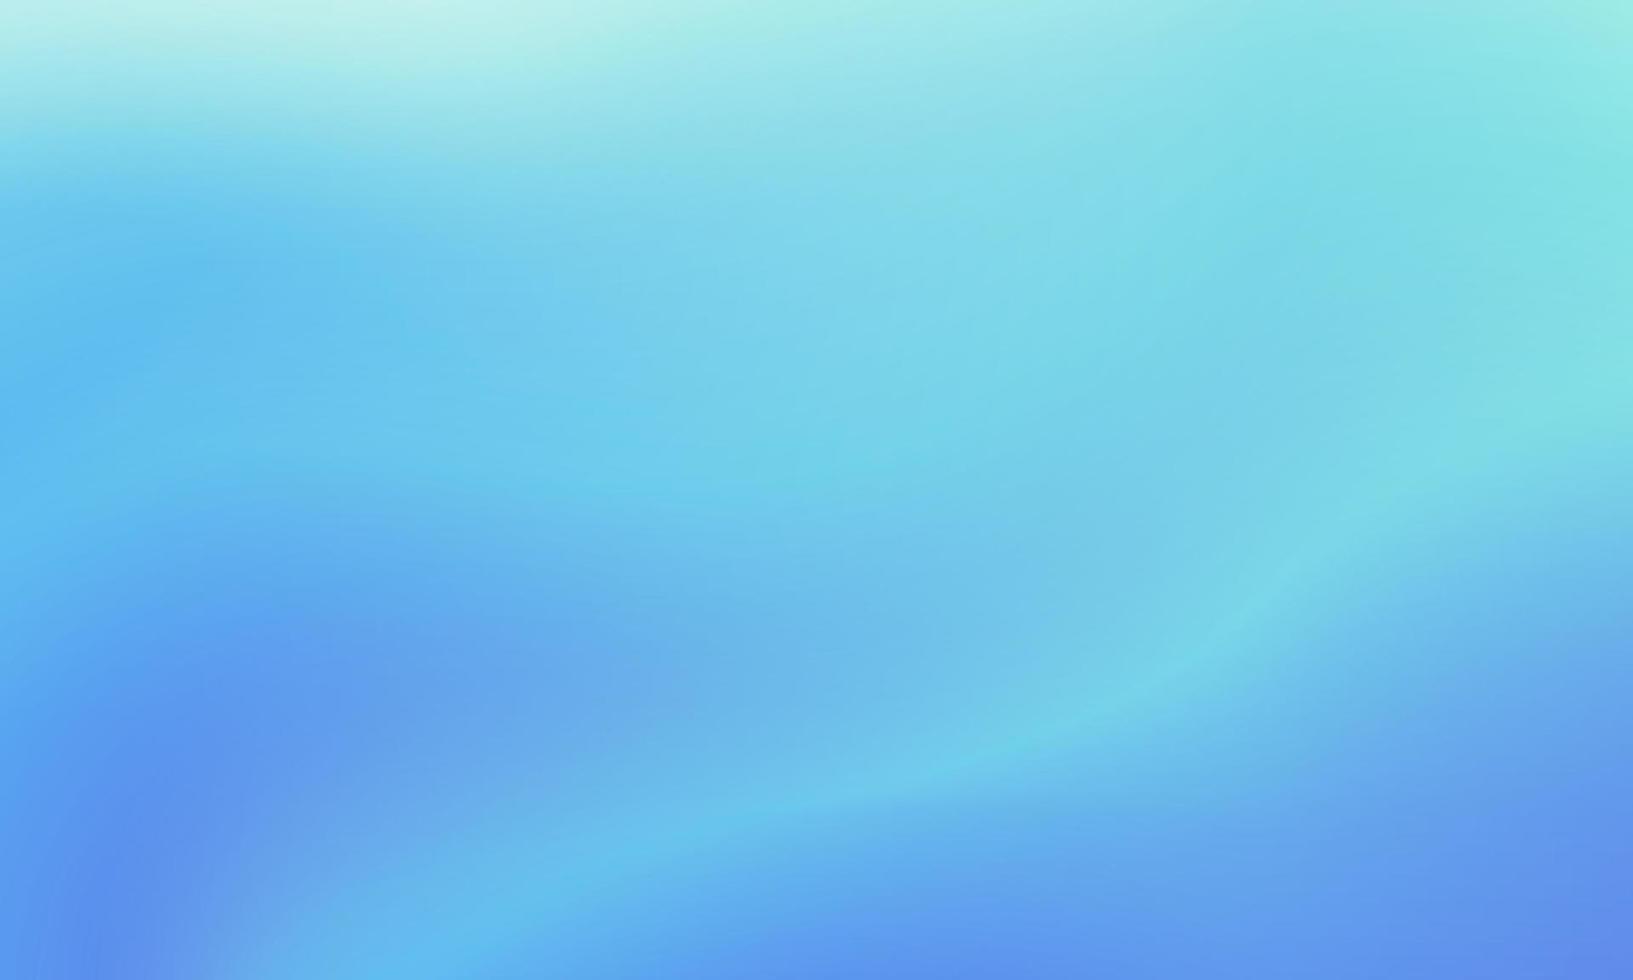 abstract wavy gradient blue modern wallpaper background vector